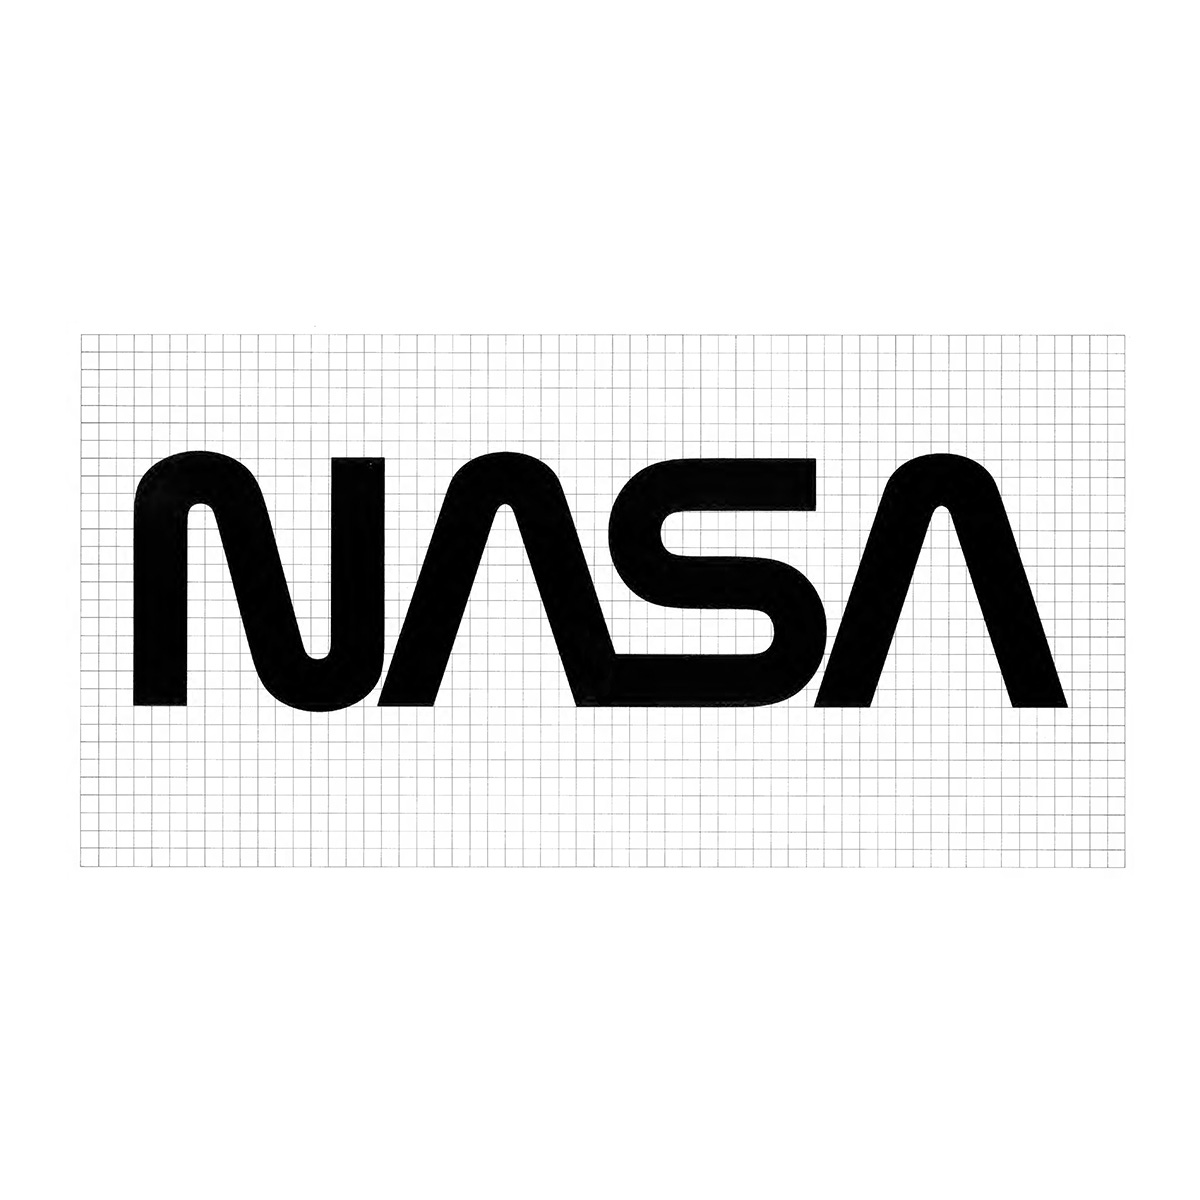 Danne & Blackburn's 1974 logo and identity for NASA